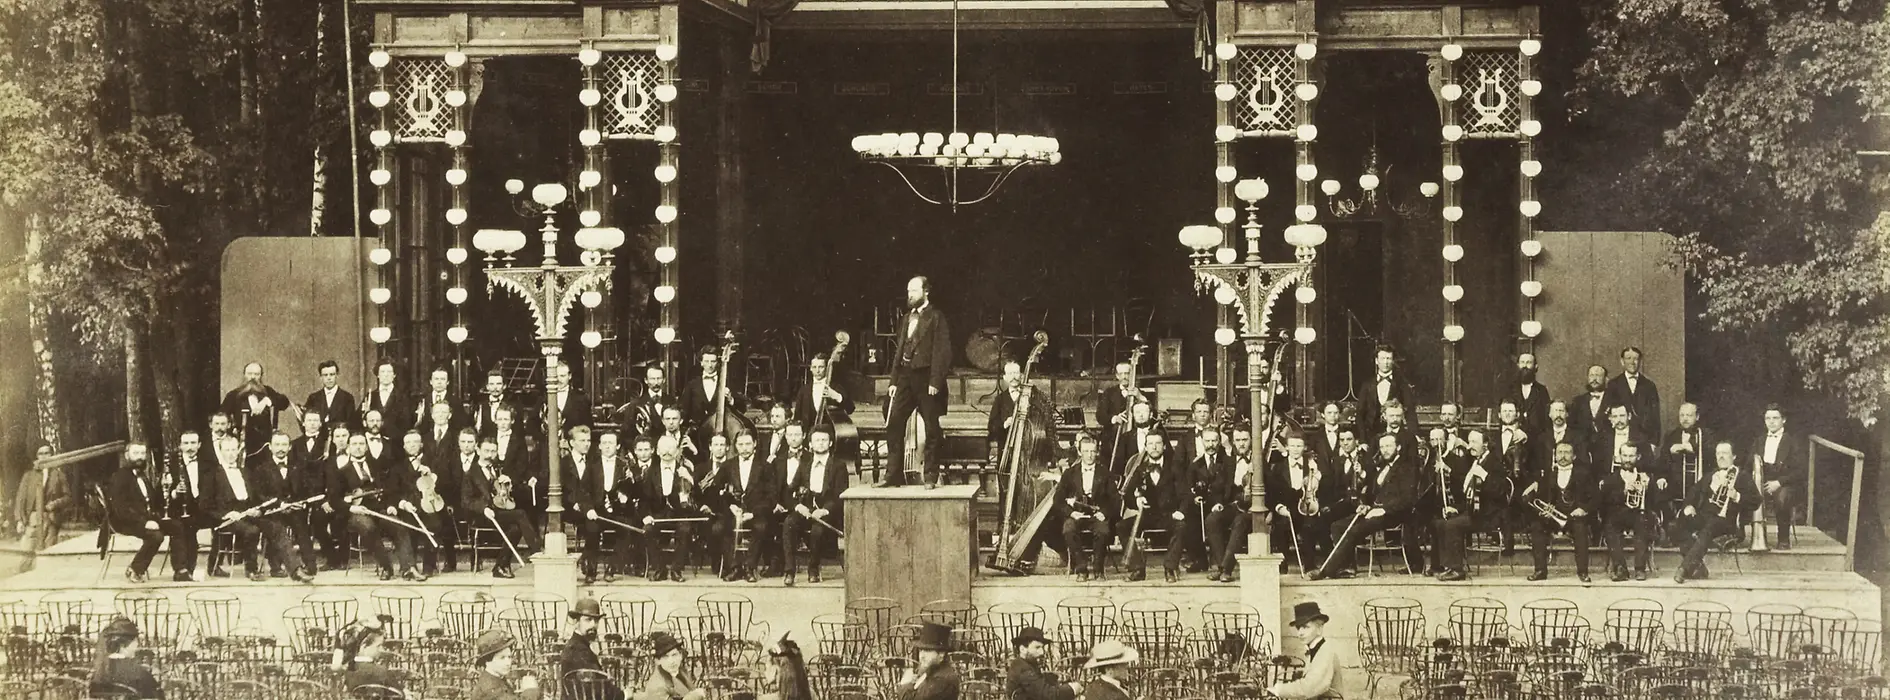 Music pavilion at the 1873 World's Fair